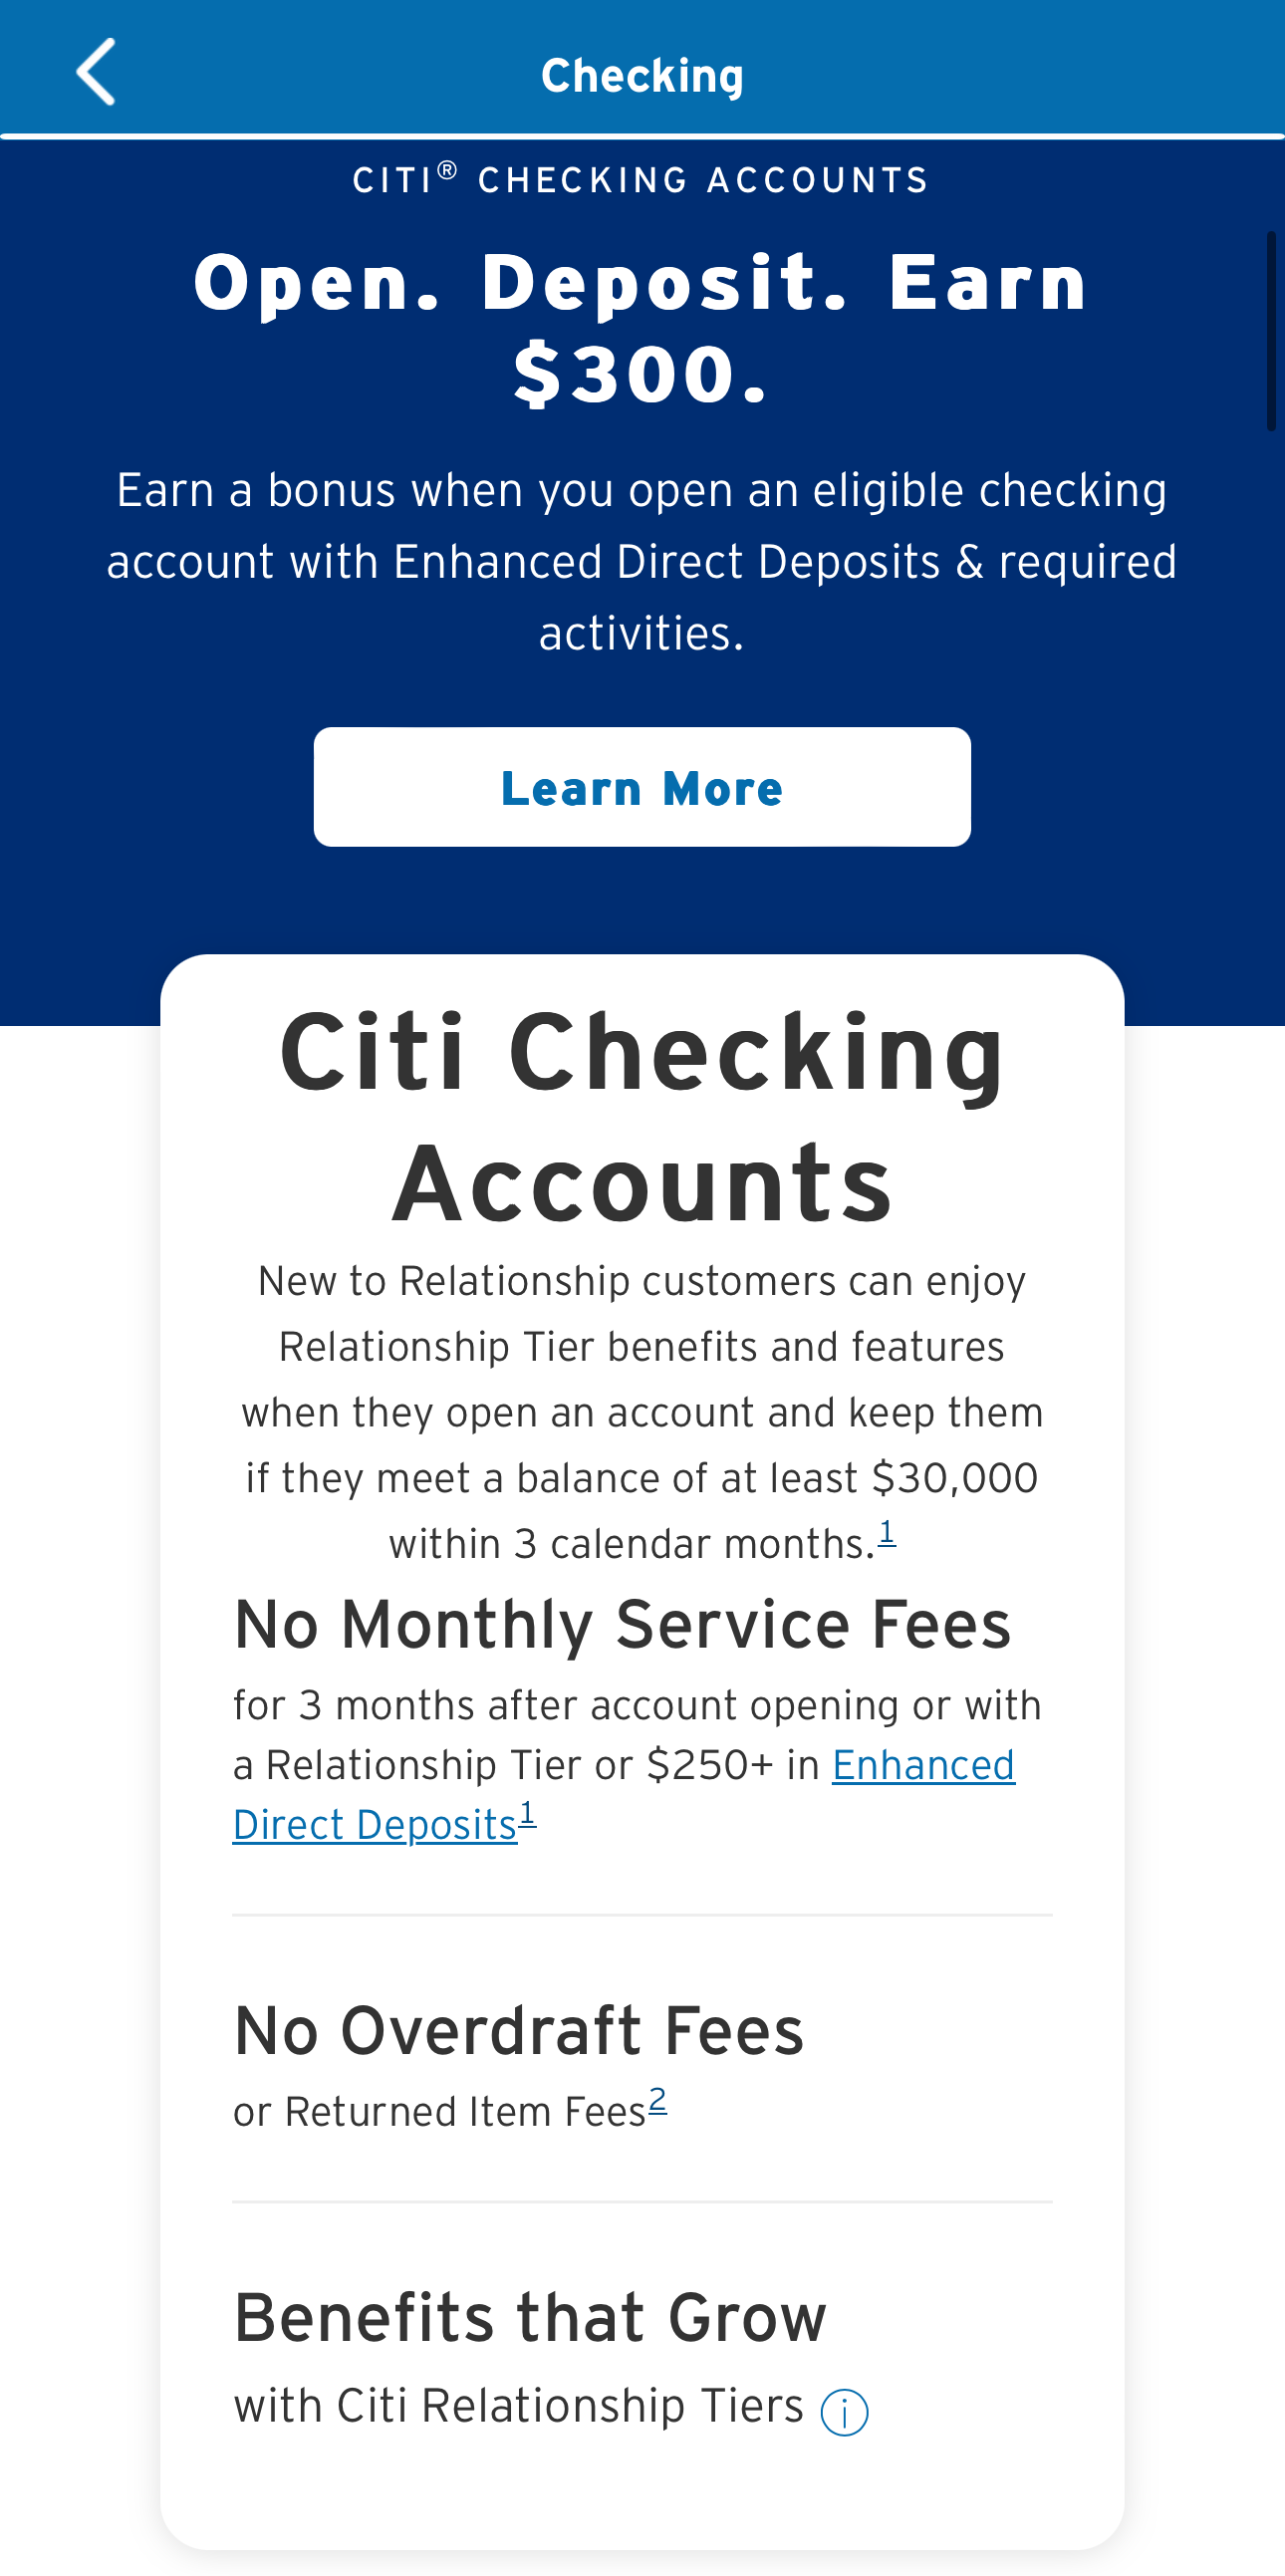 Citi Checking account details